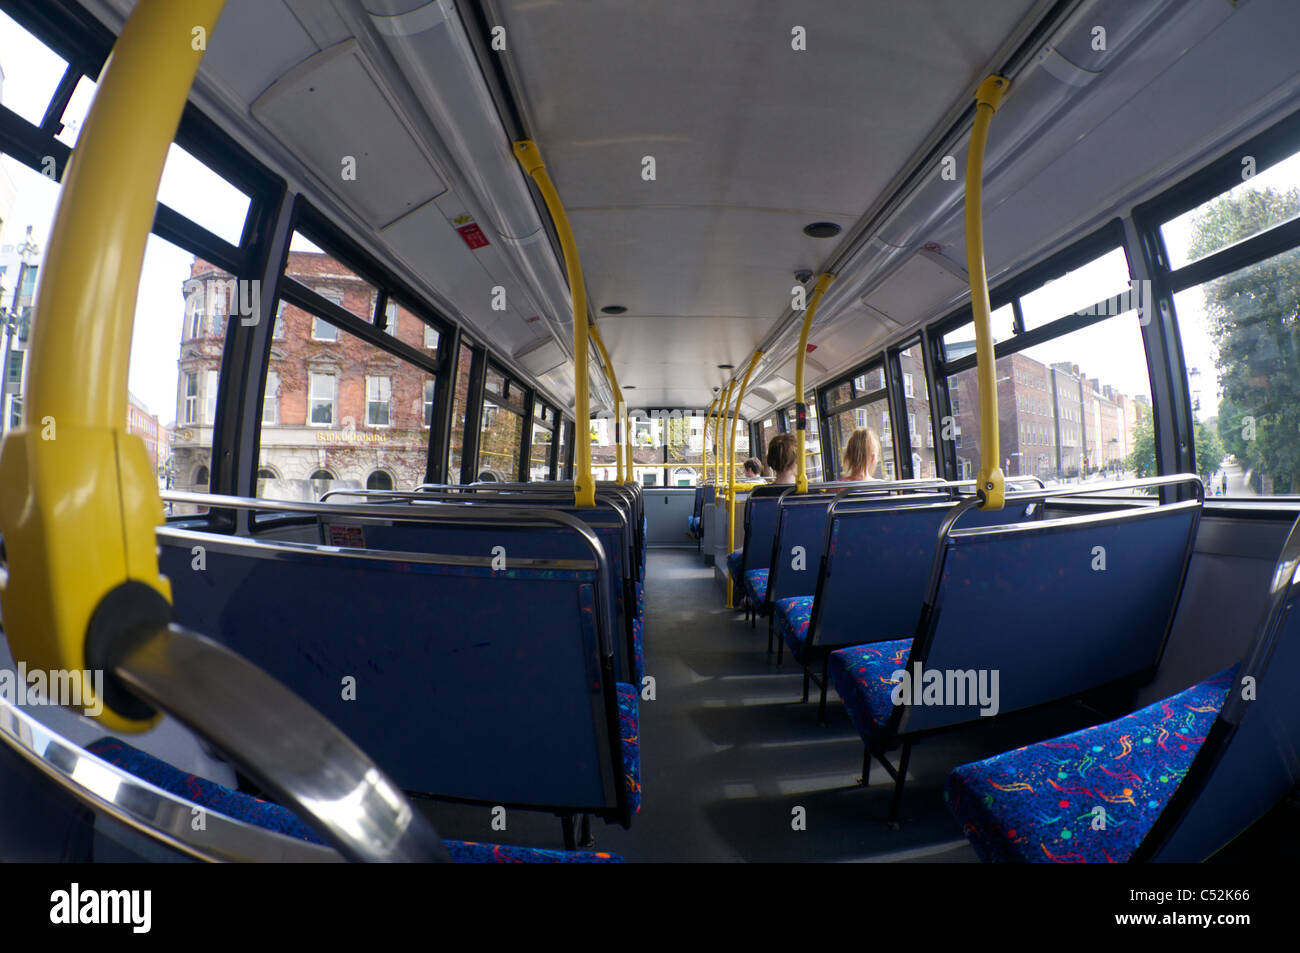 Inside Dublin bus Stock Photo - Alamy